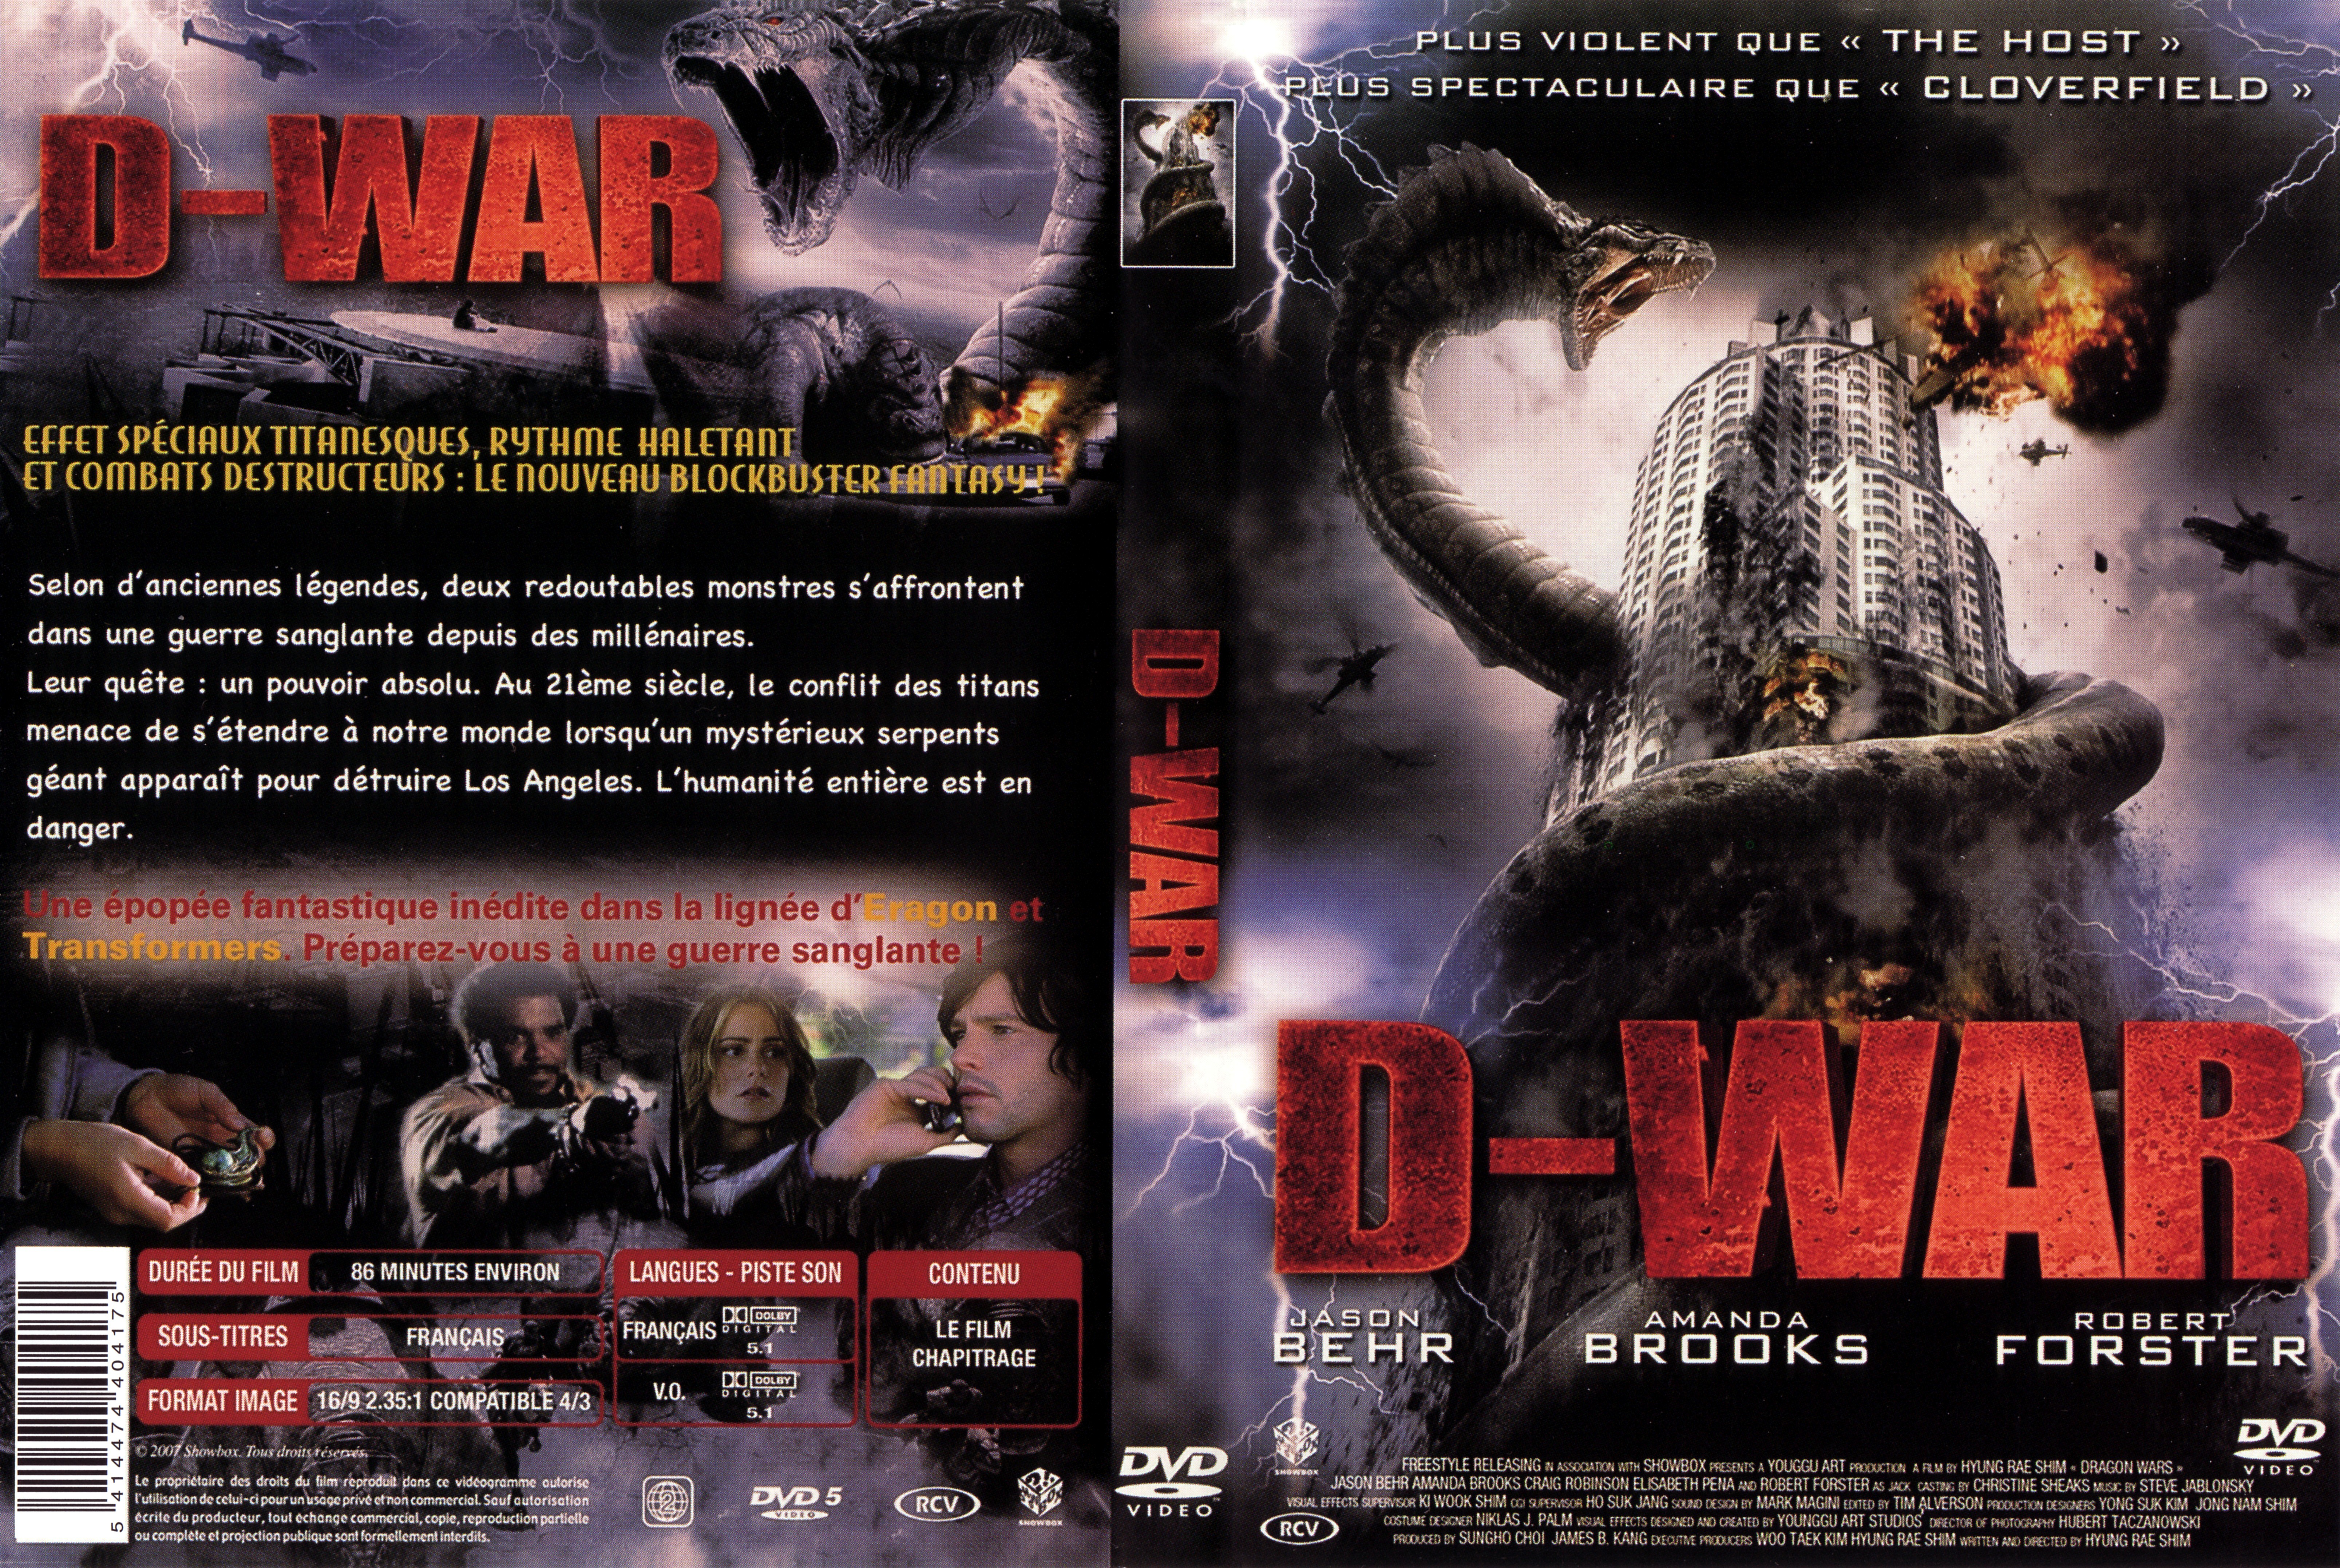 Jaquette DVD D-War v2